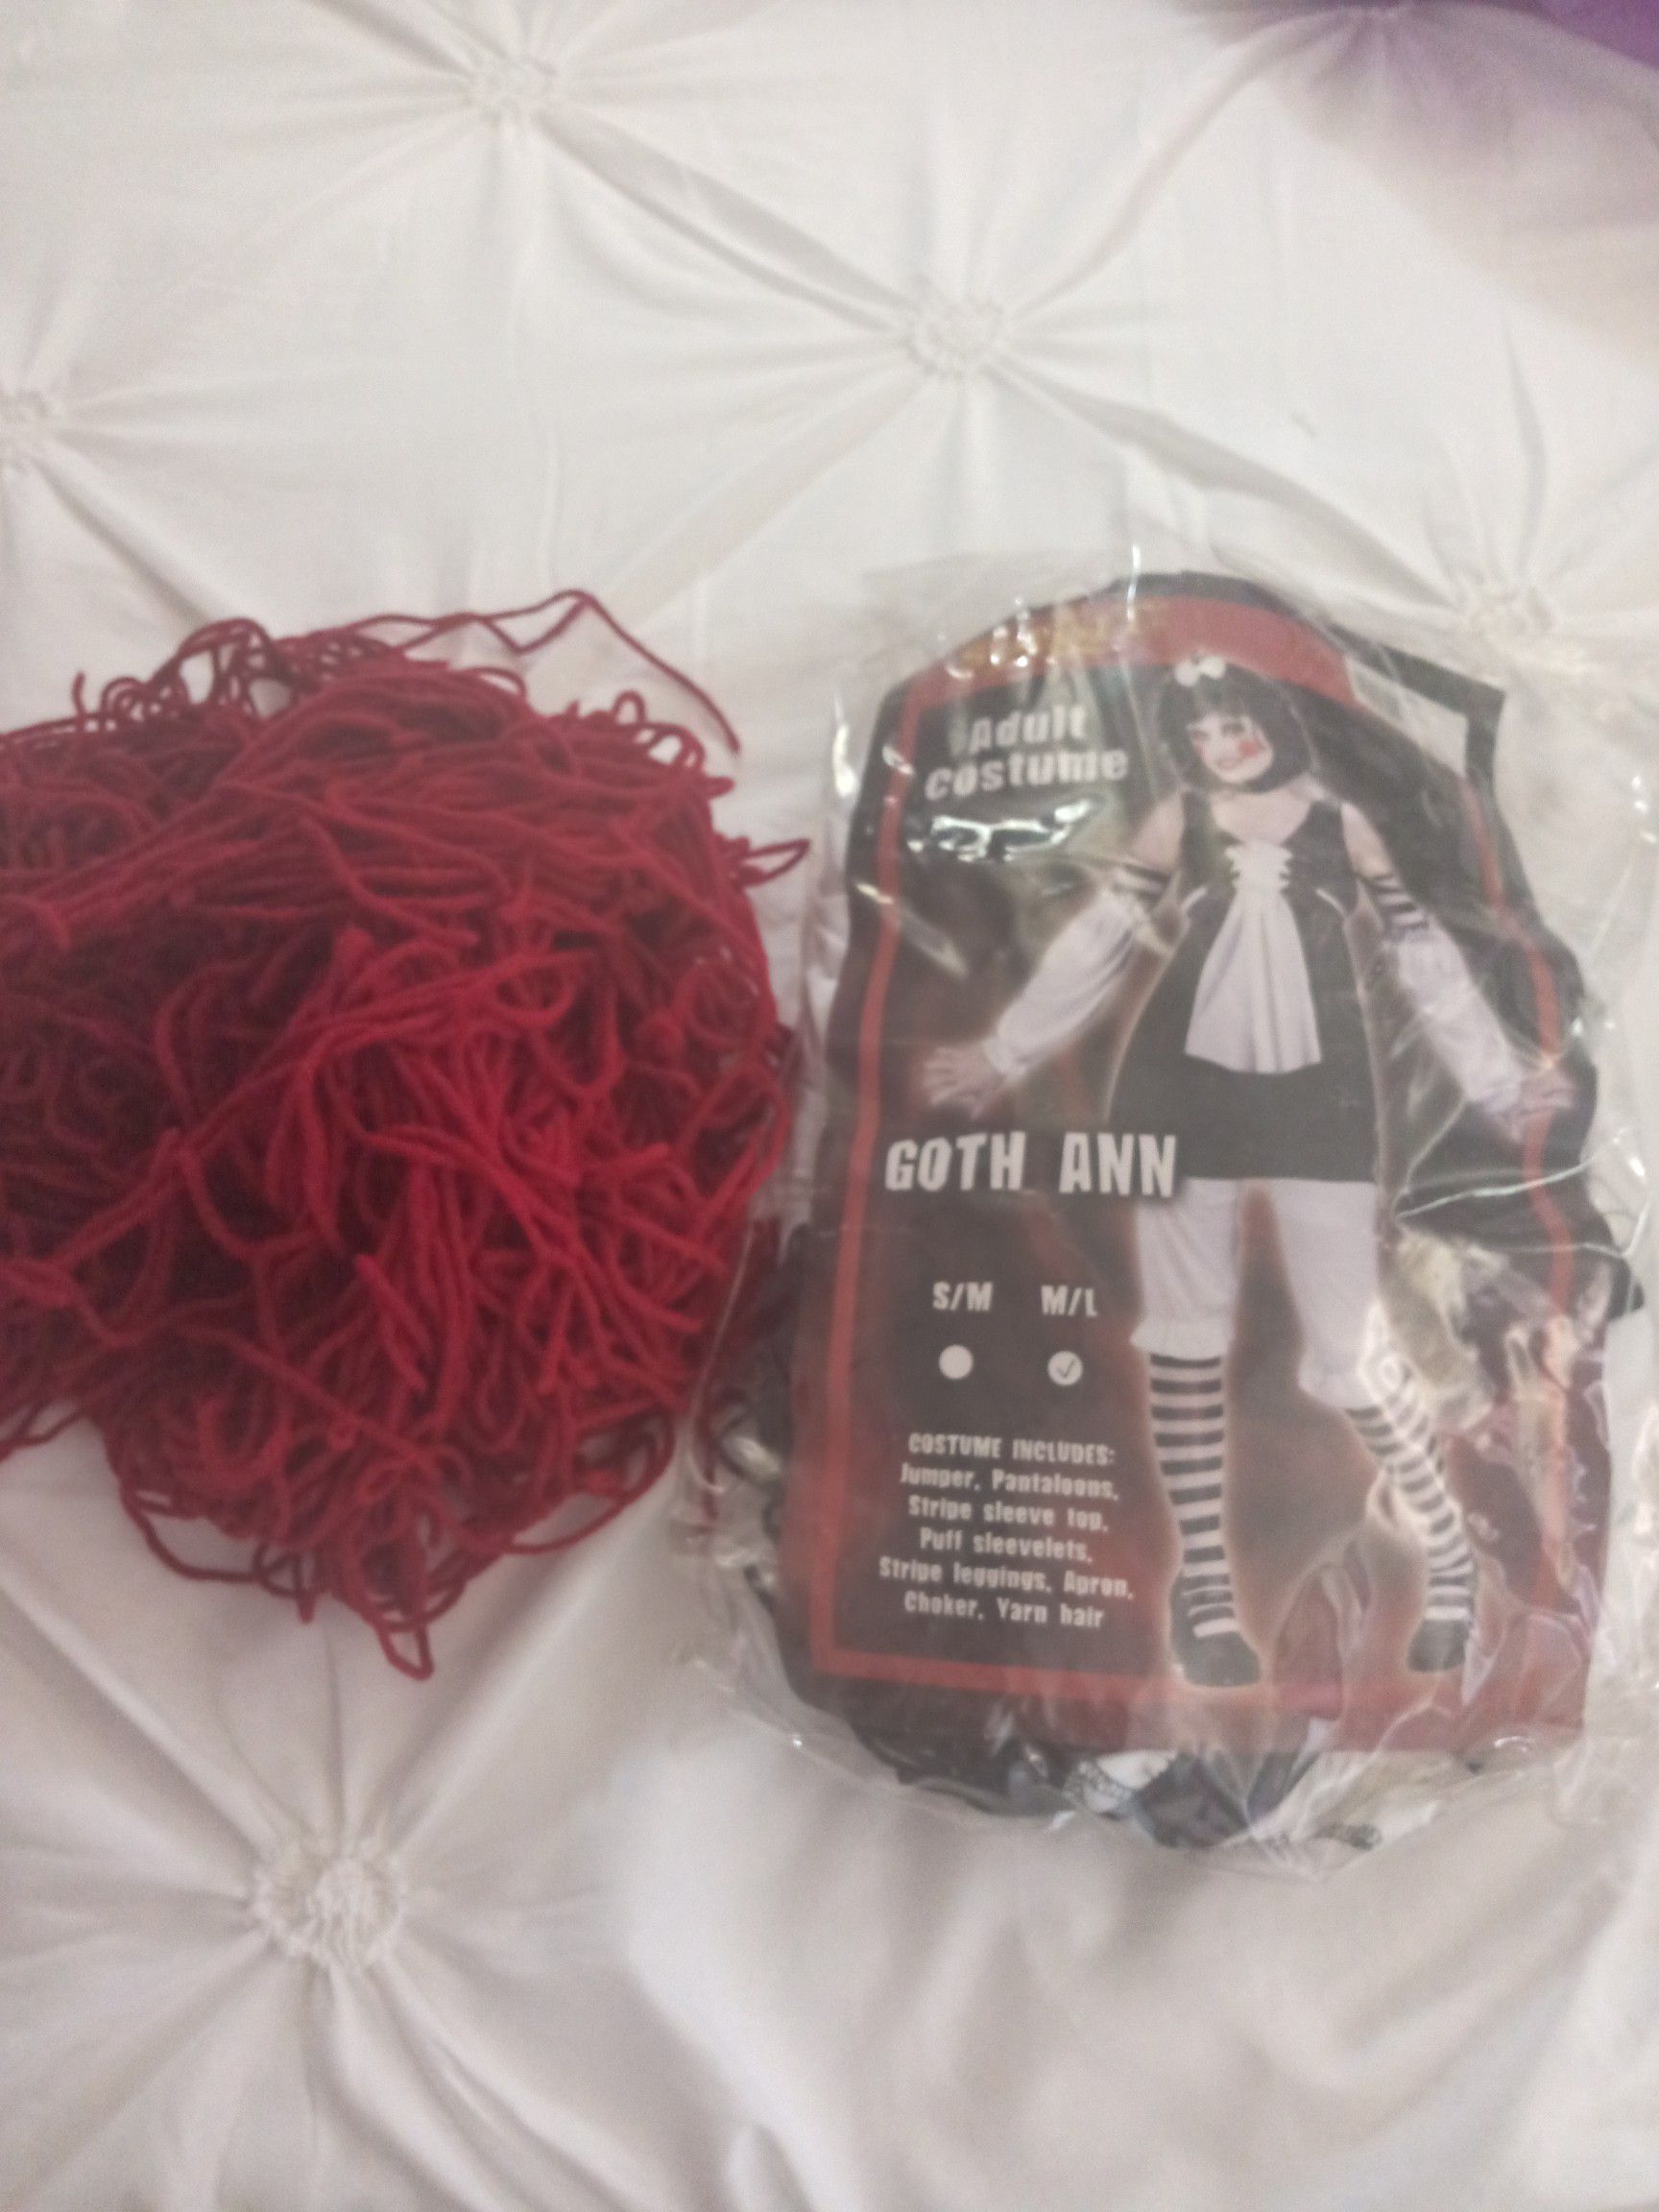 Rag doll costume with extra yarn hair